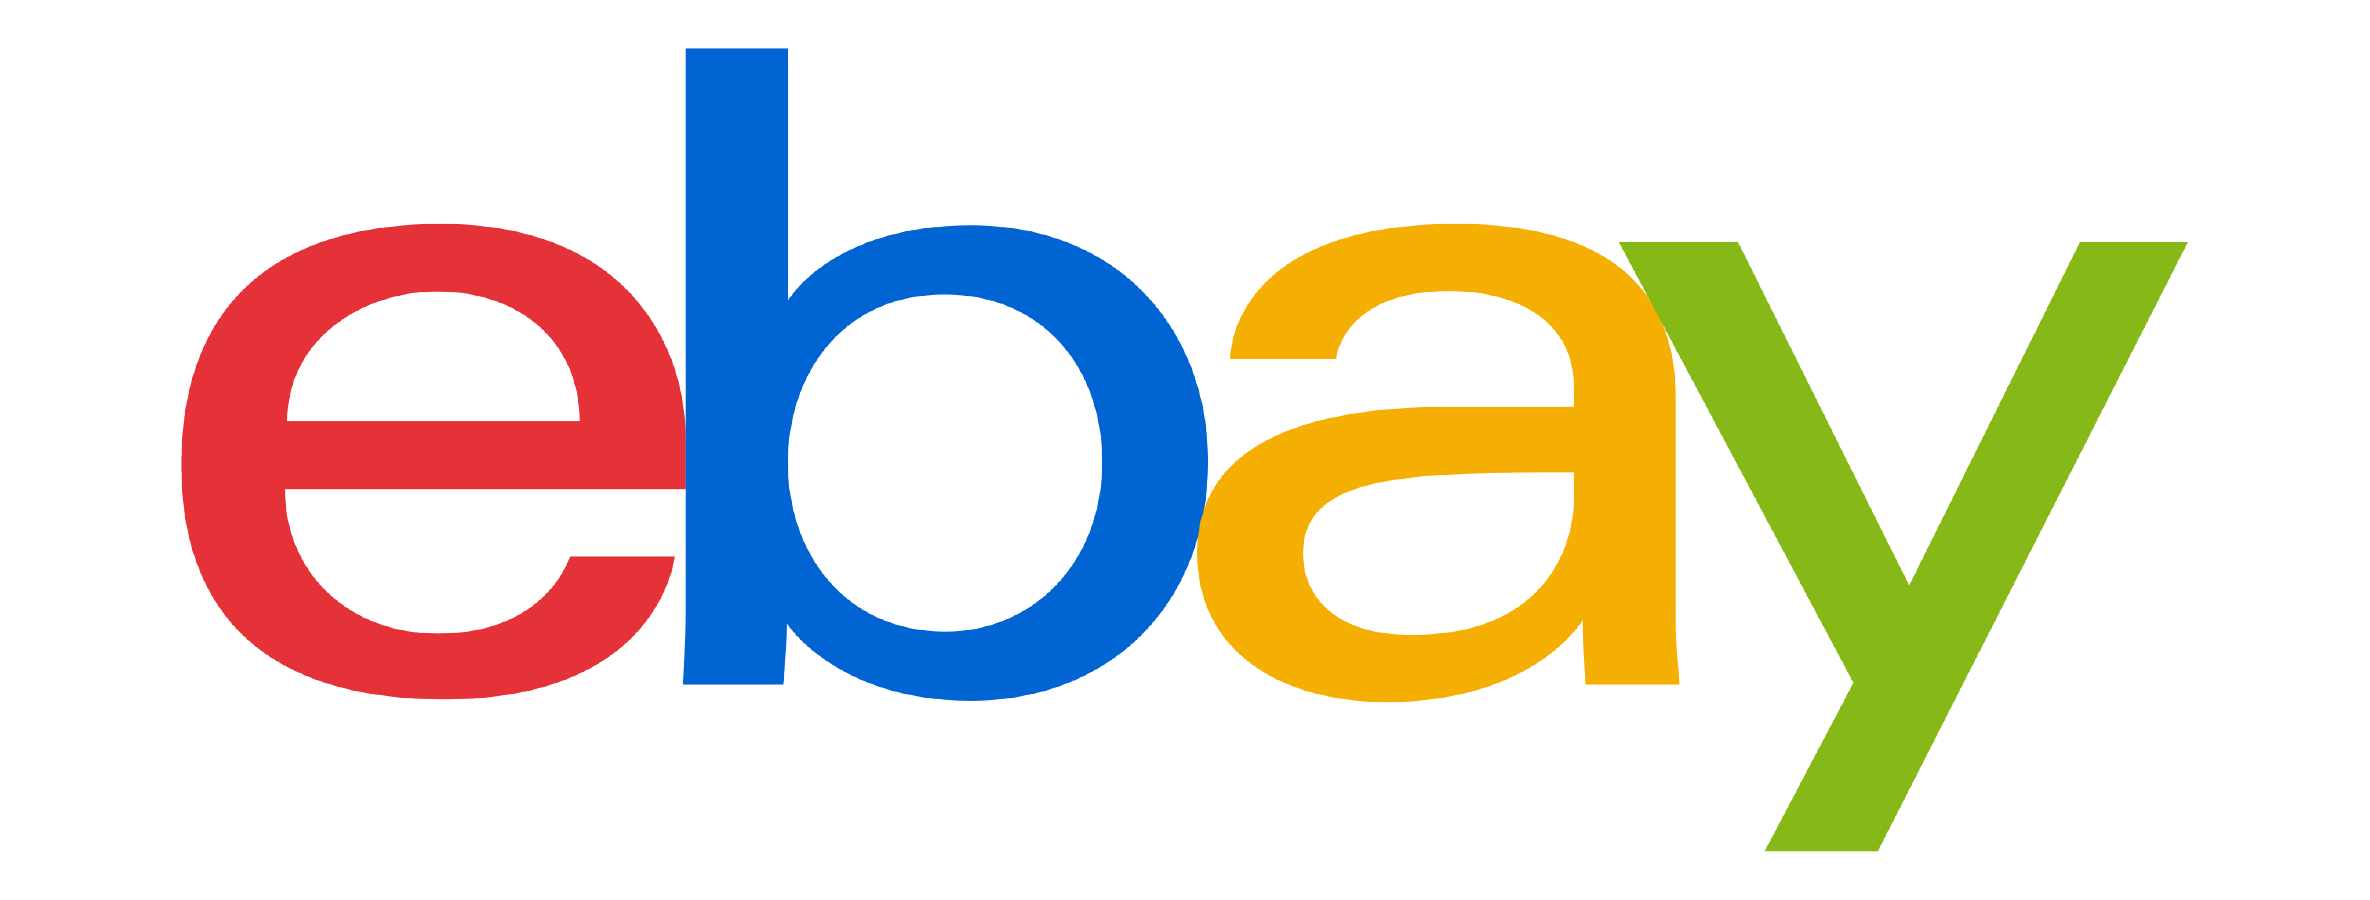 ebay-cart